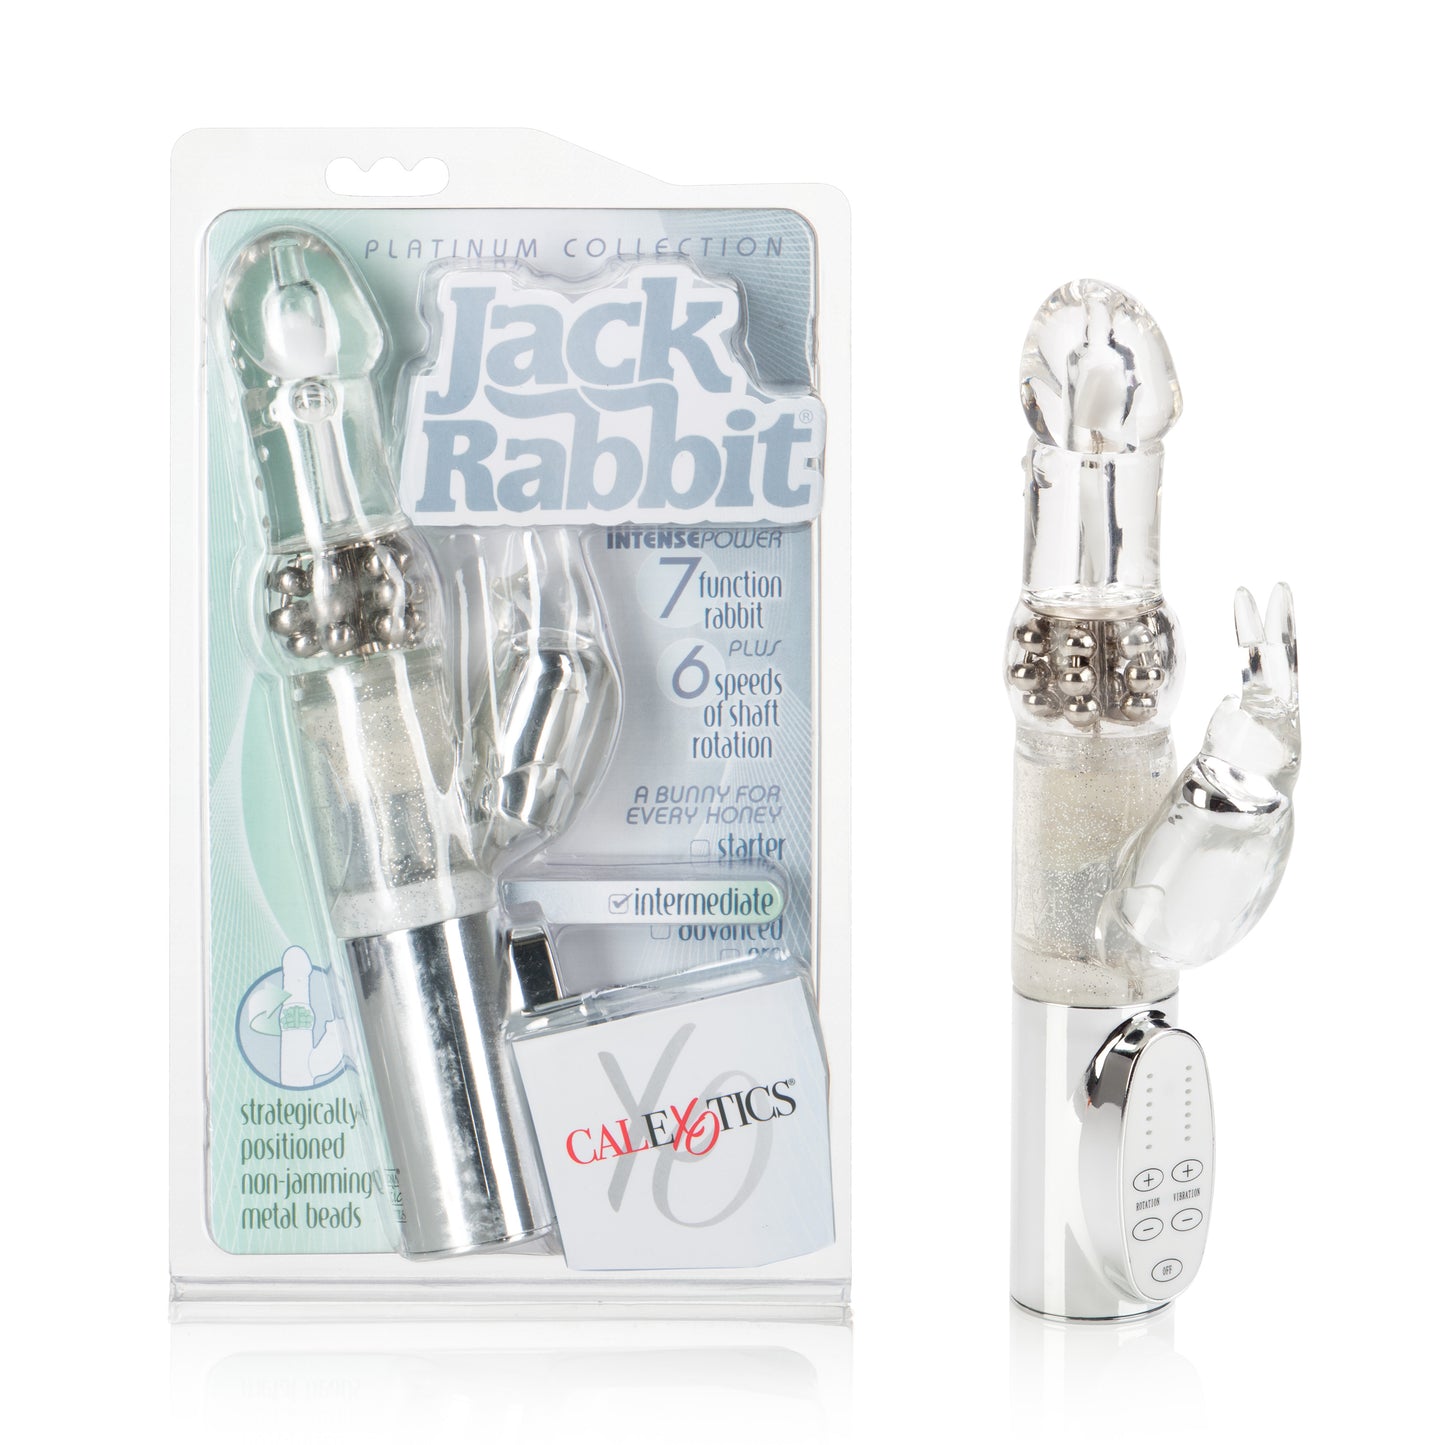 Platinum Jack Rabbit - Silver